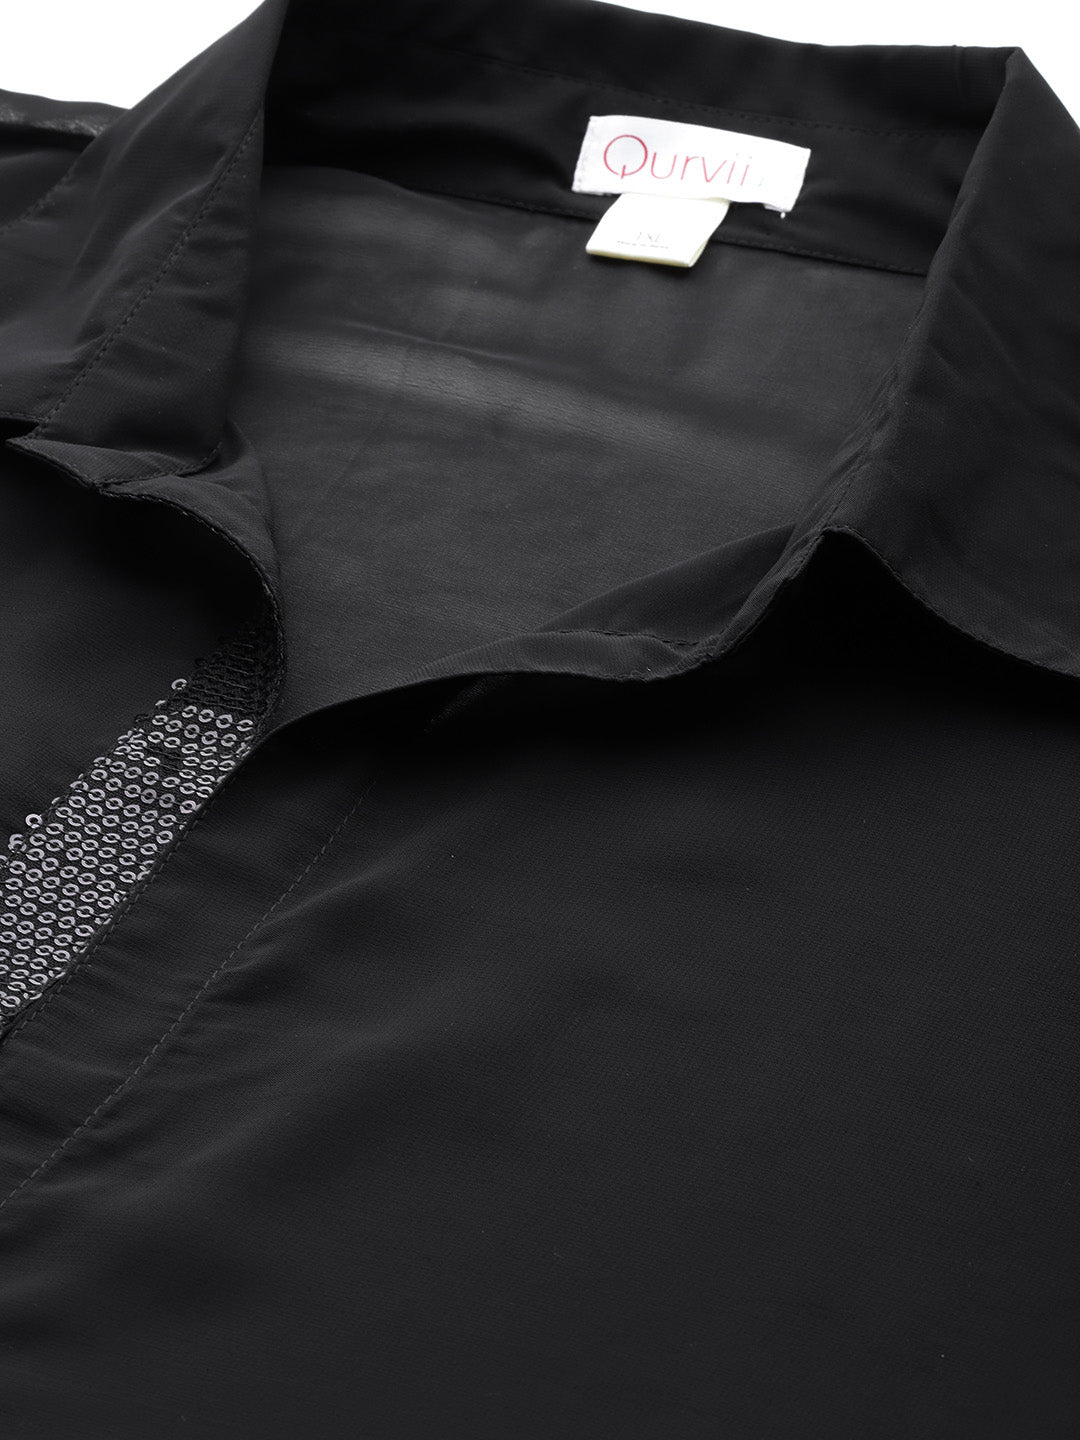 Black georgette kaftan shirt